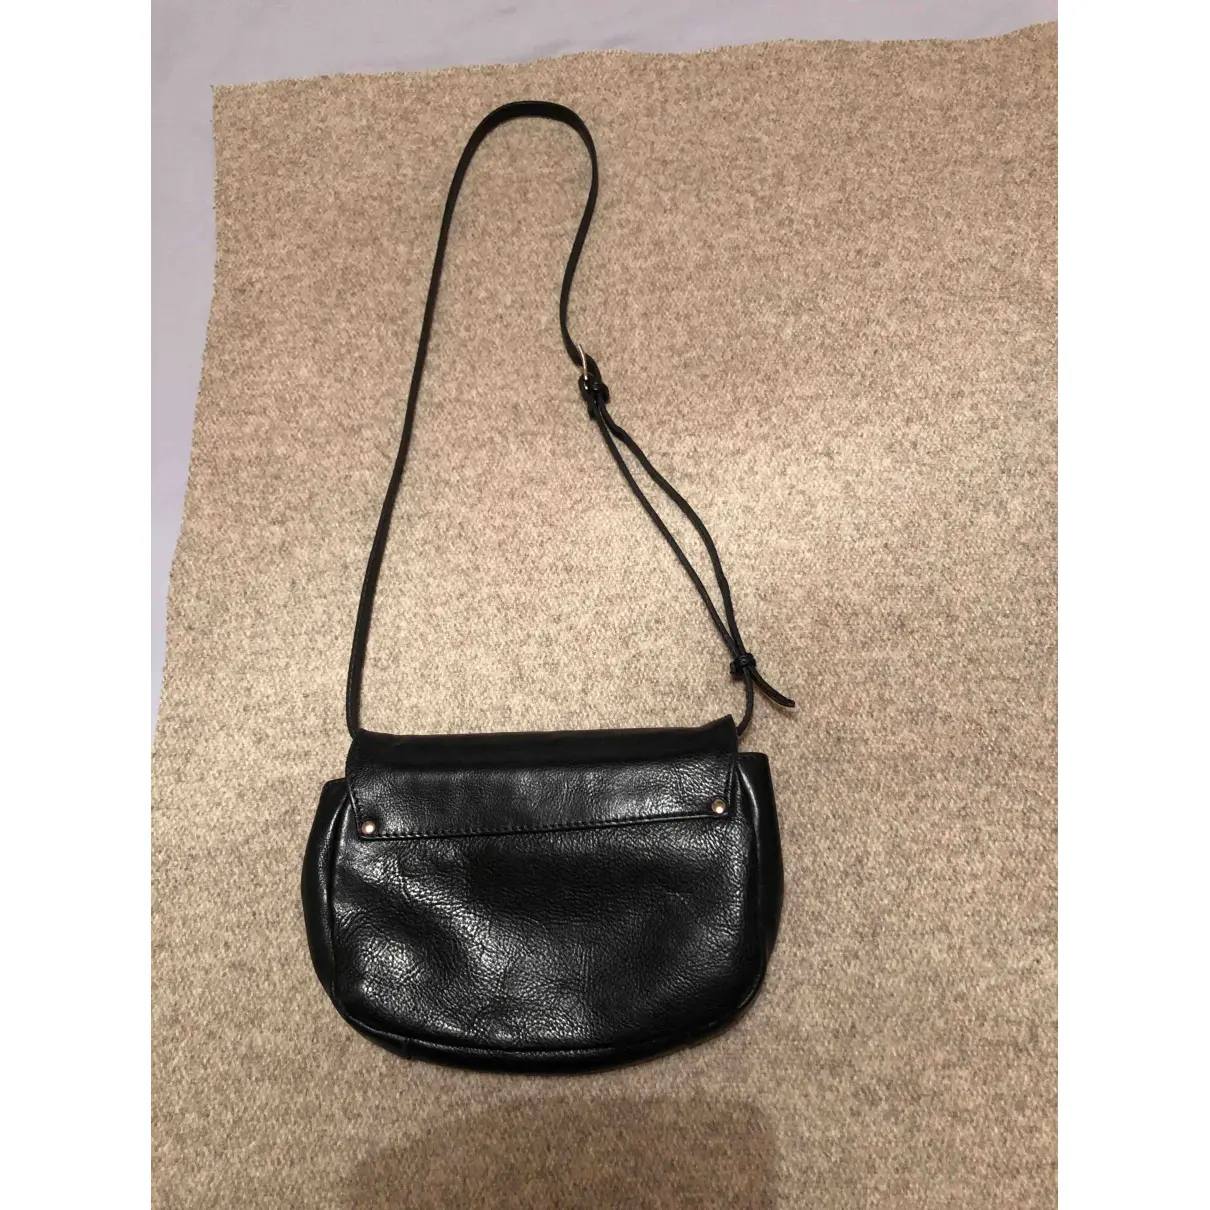 Buy Il Bisonte Leather crossbody bag online